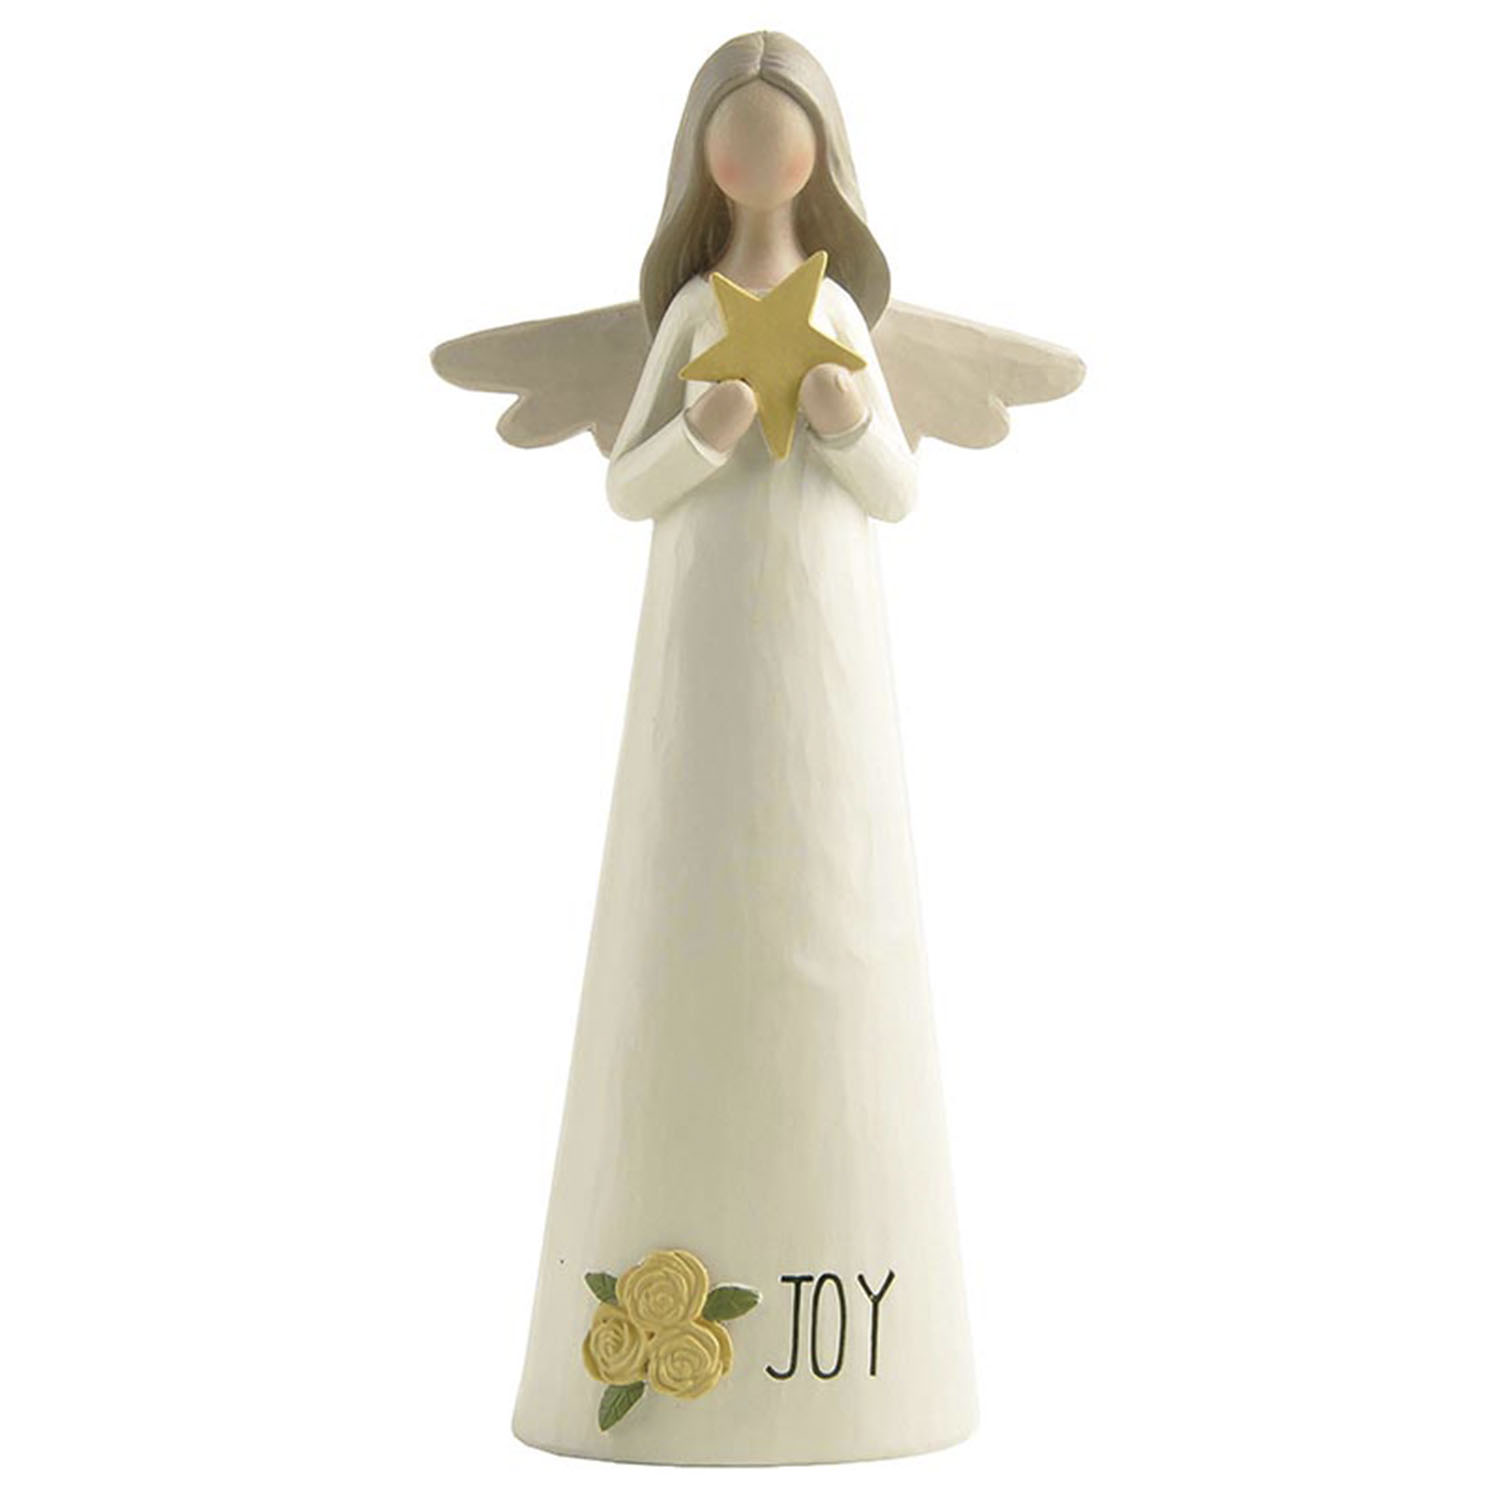 Ennas artificial small angel figurines handicraft at discount-1